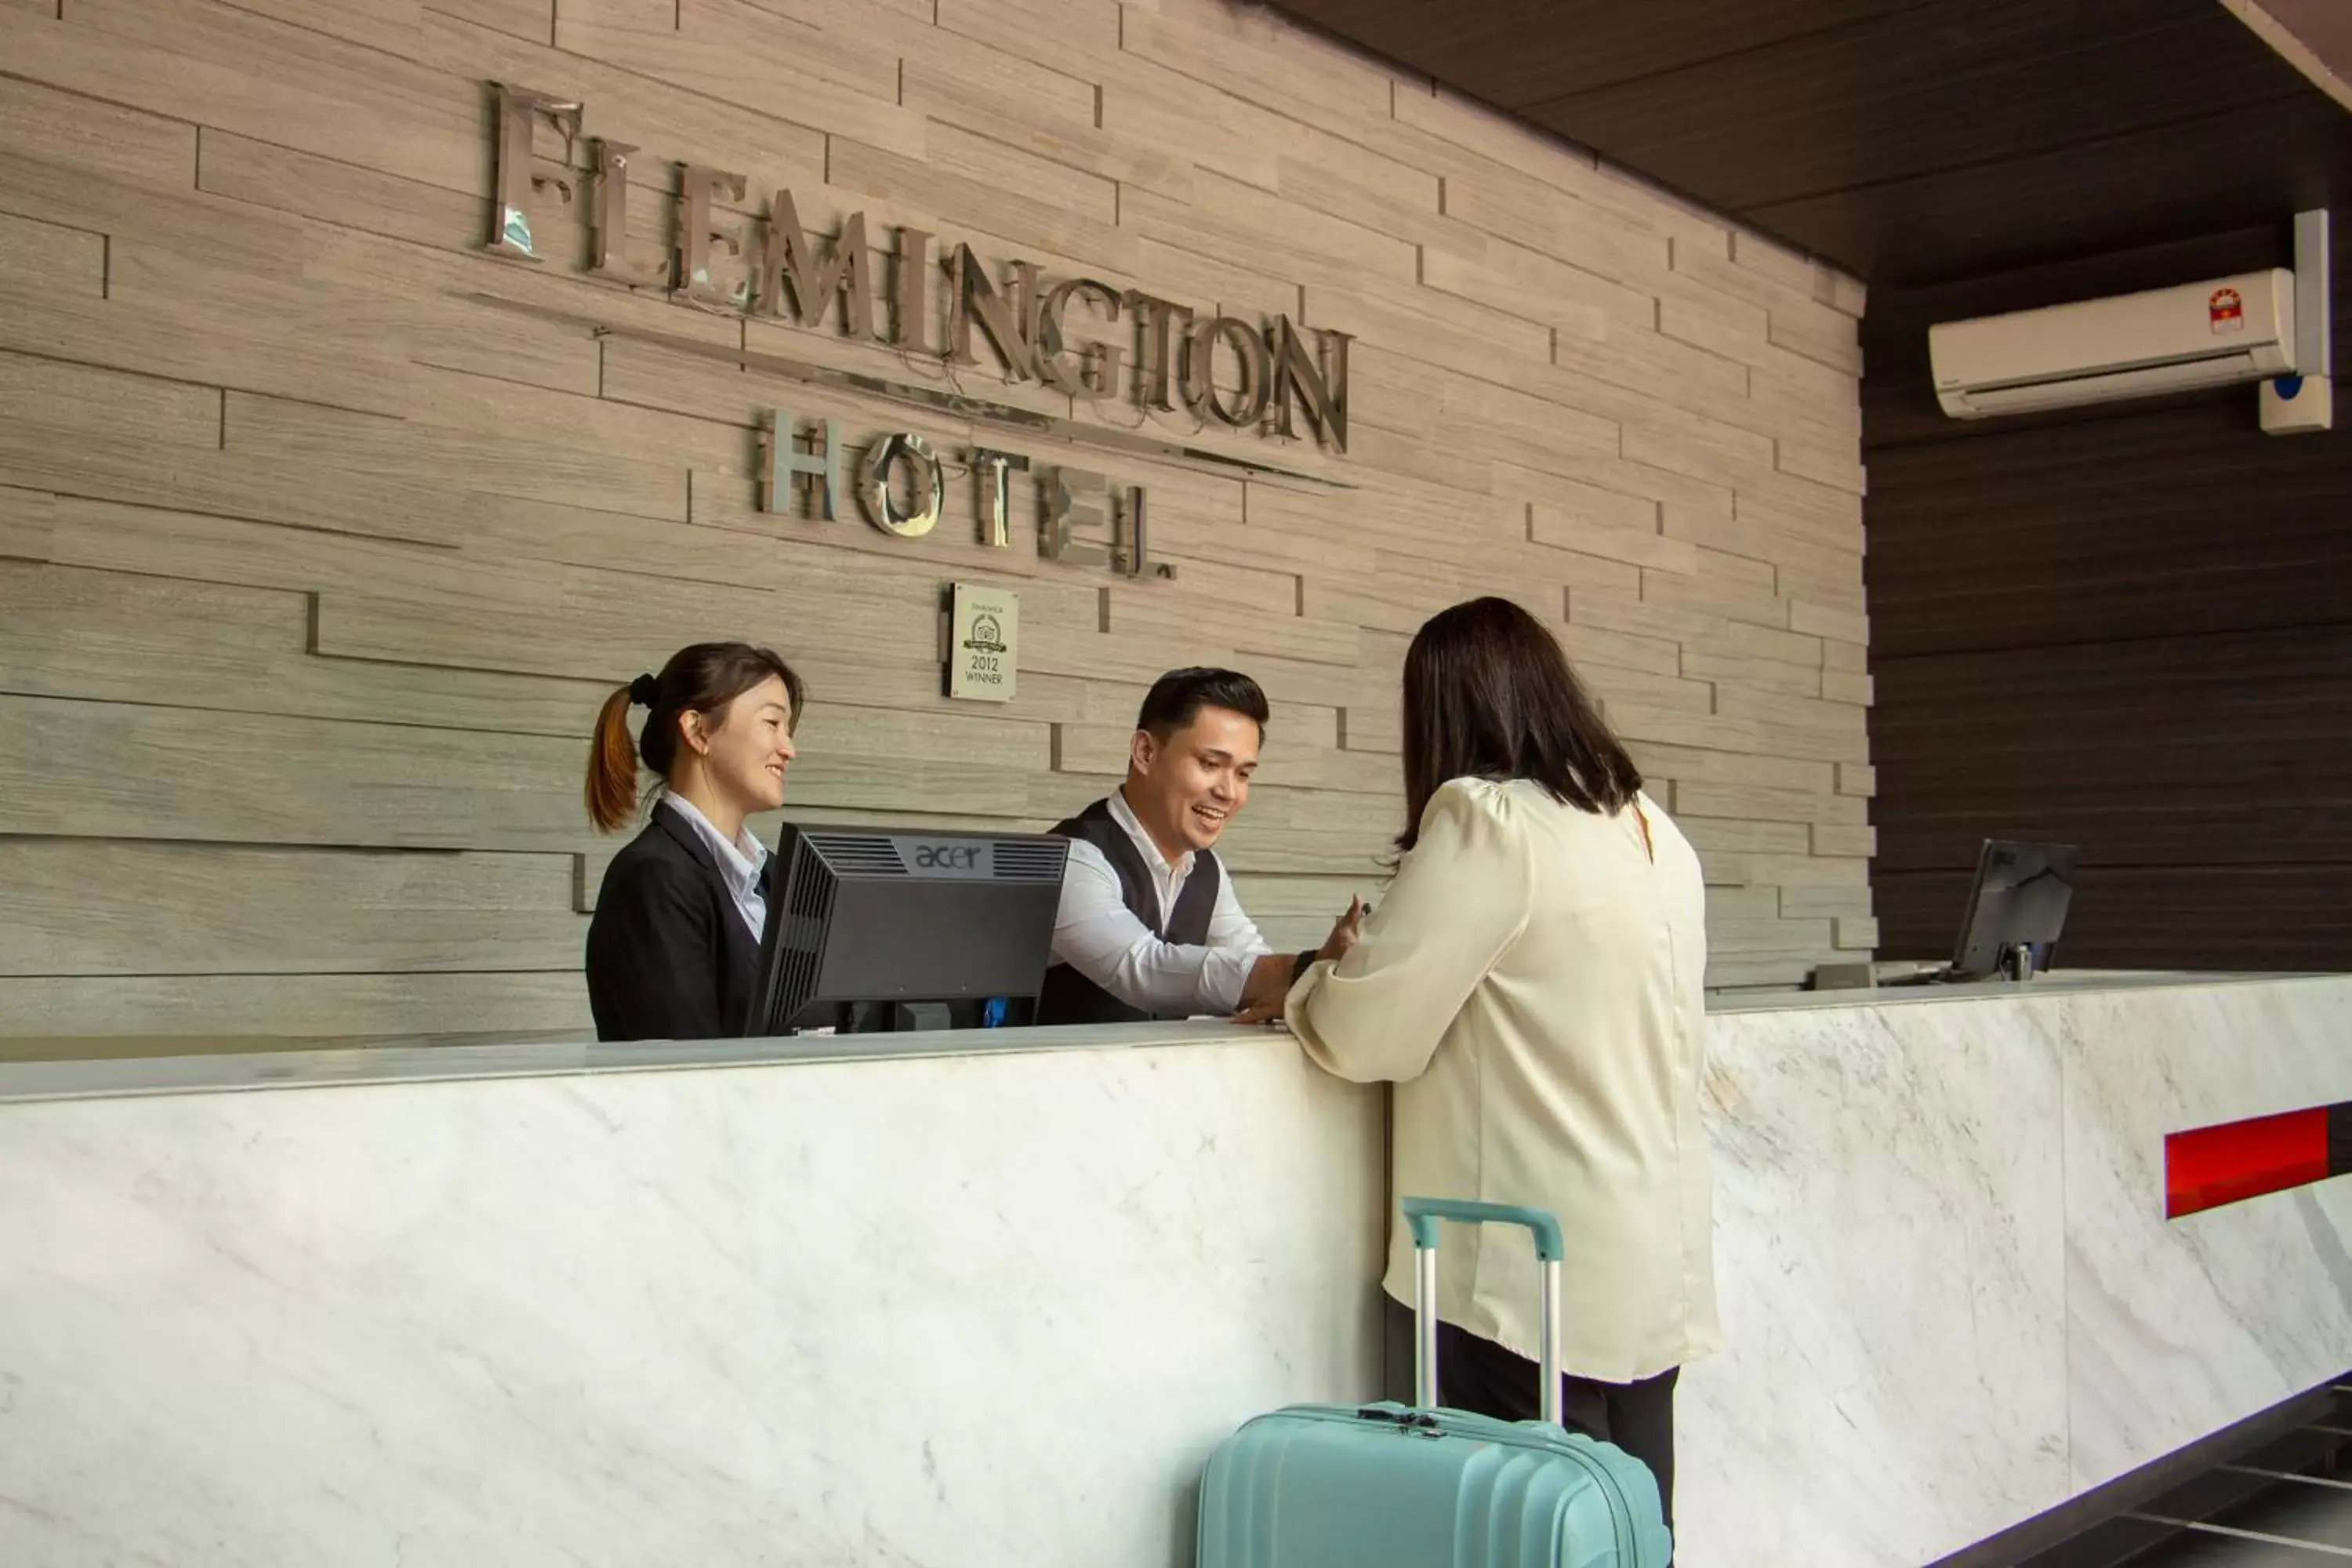 Flemington Hotel